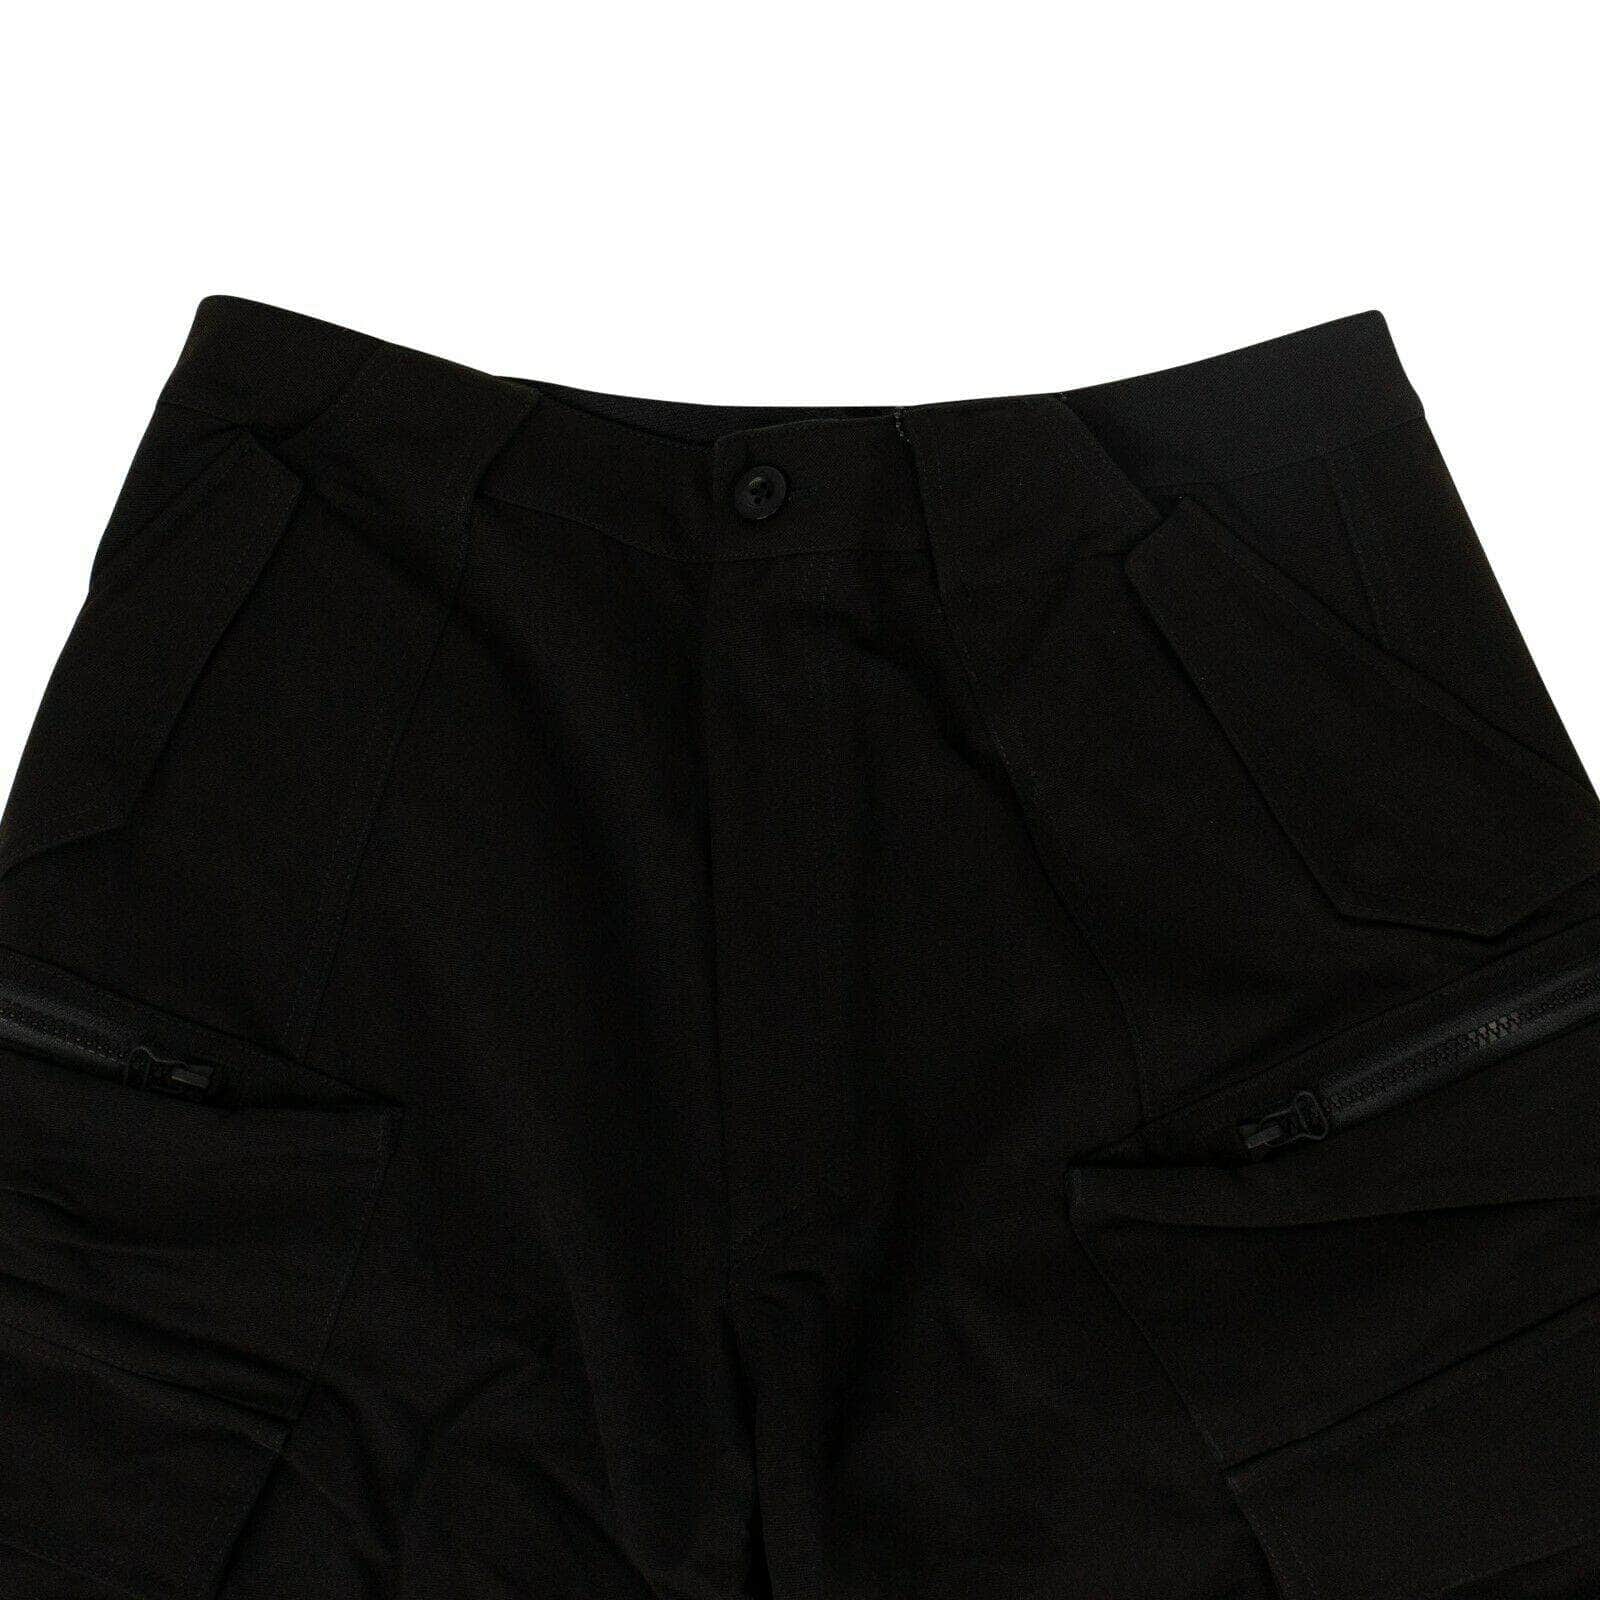 GUERRILLA GROUP Men's Pants GUERRILLA GROUP x EYES & SINS Cargo Pants - Black